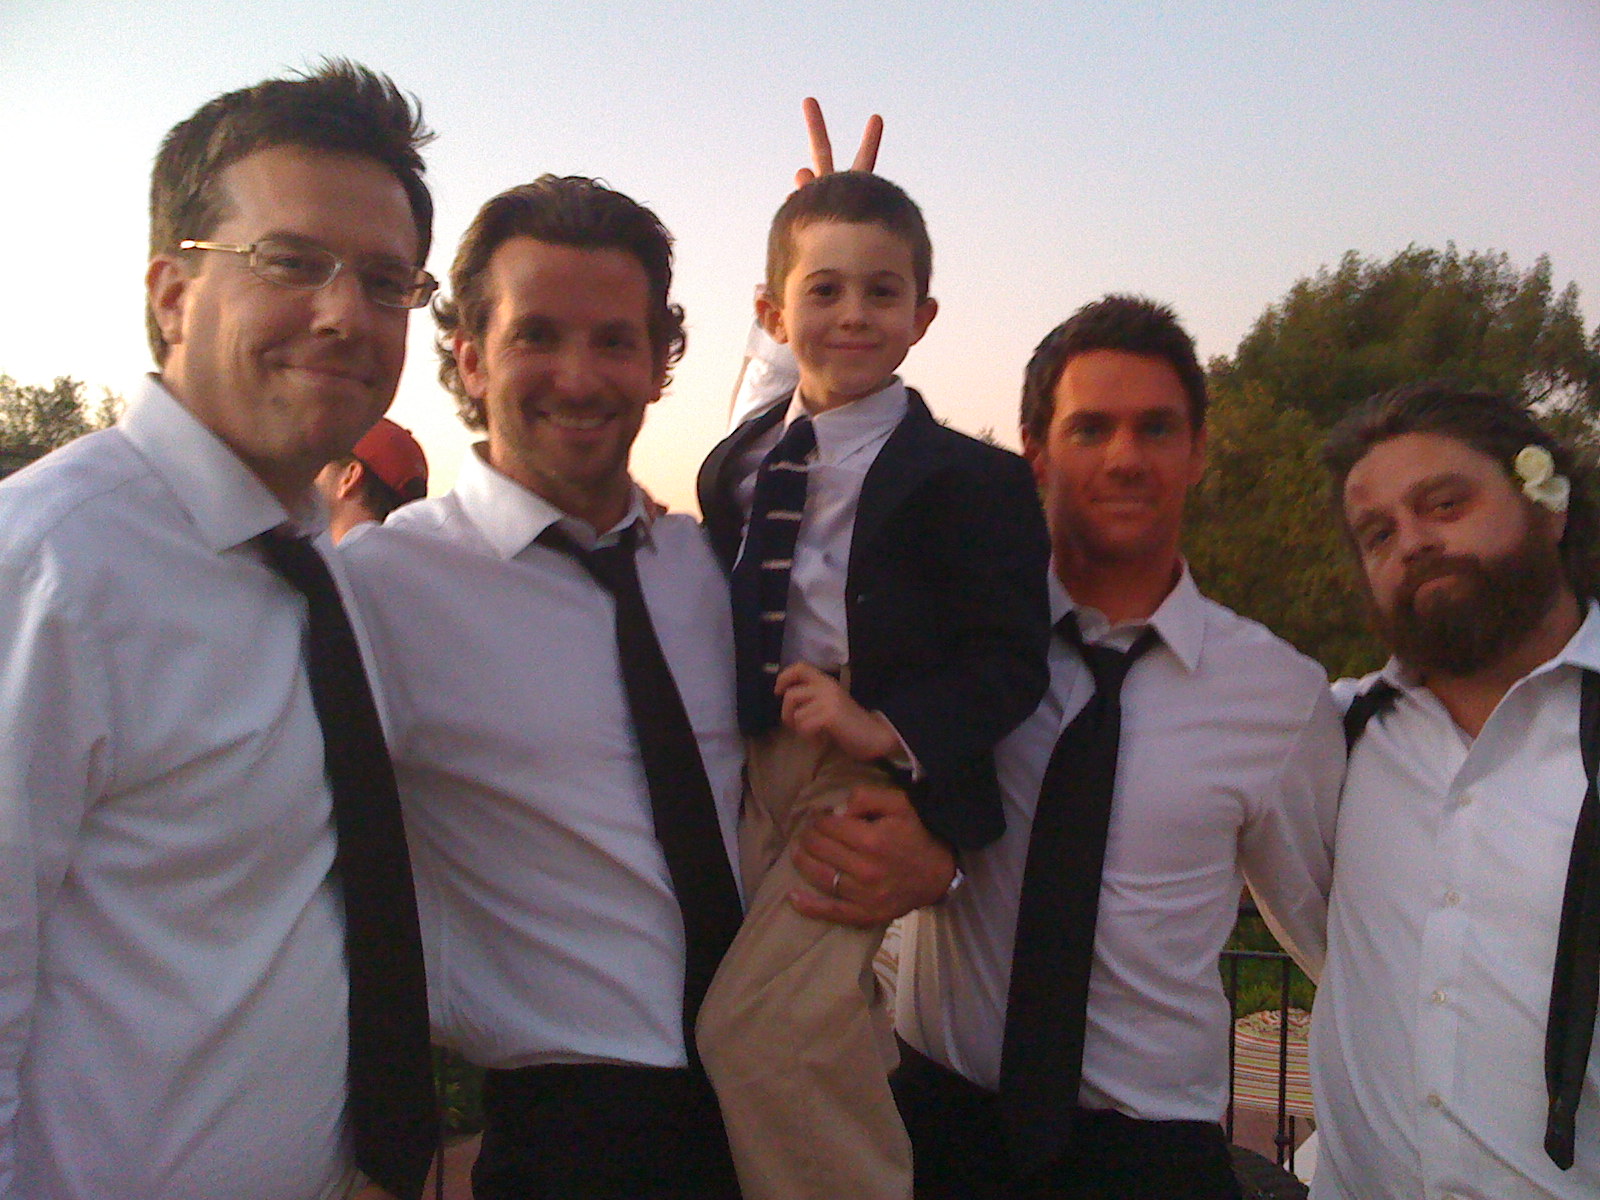 Ed Helms, Bradley Cooper, Andrew Astor, Justin Bartha, Zach Galifianakis on the set of The Hangover